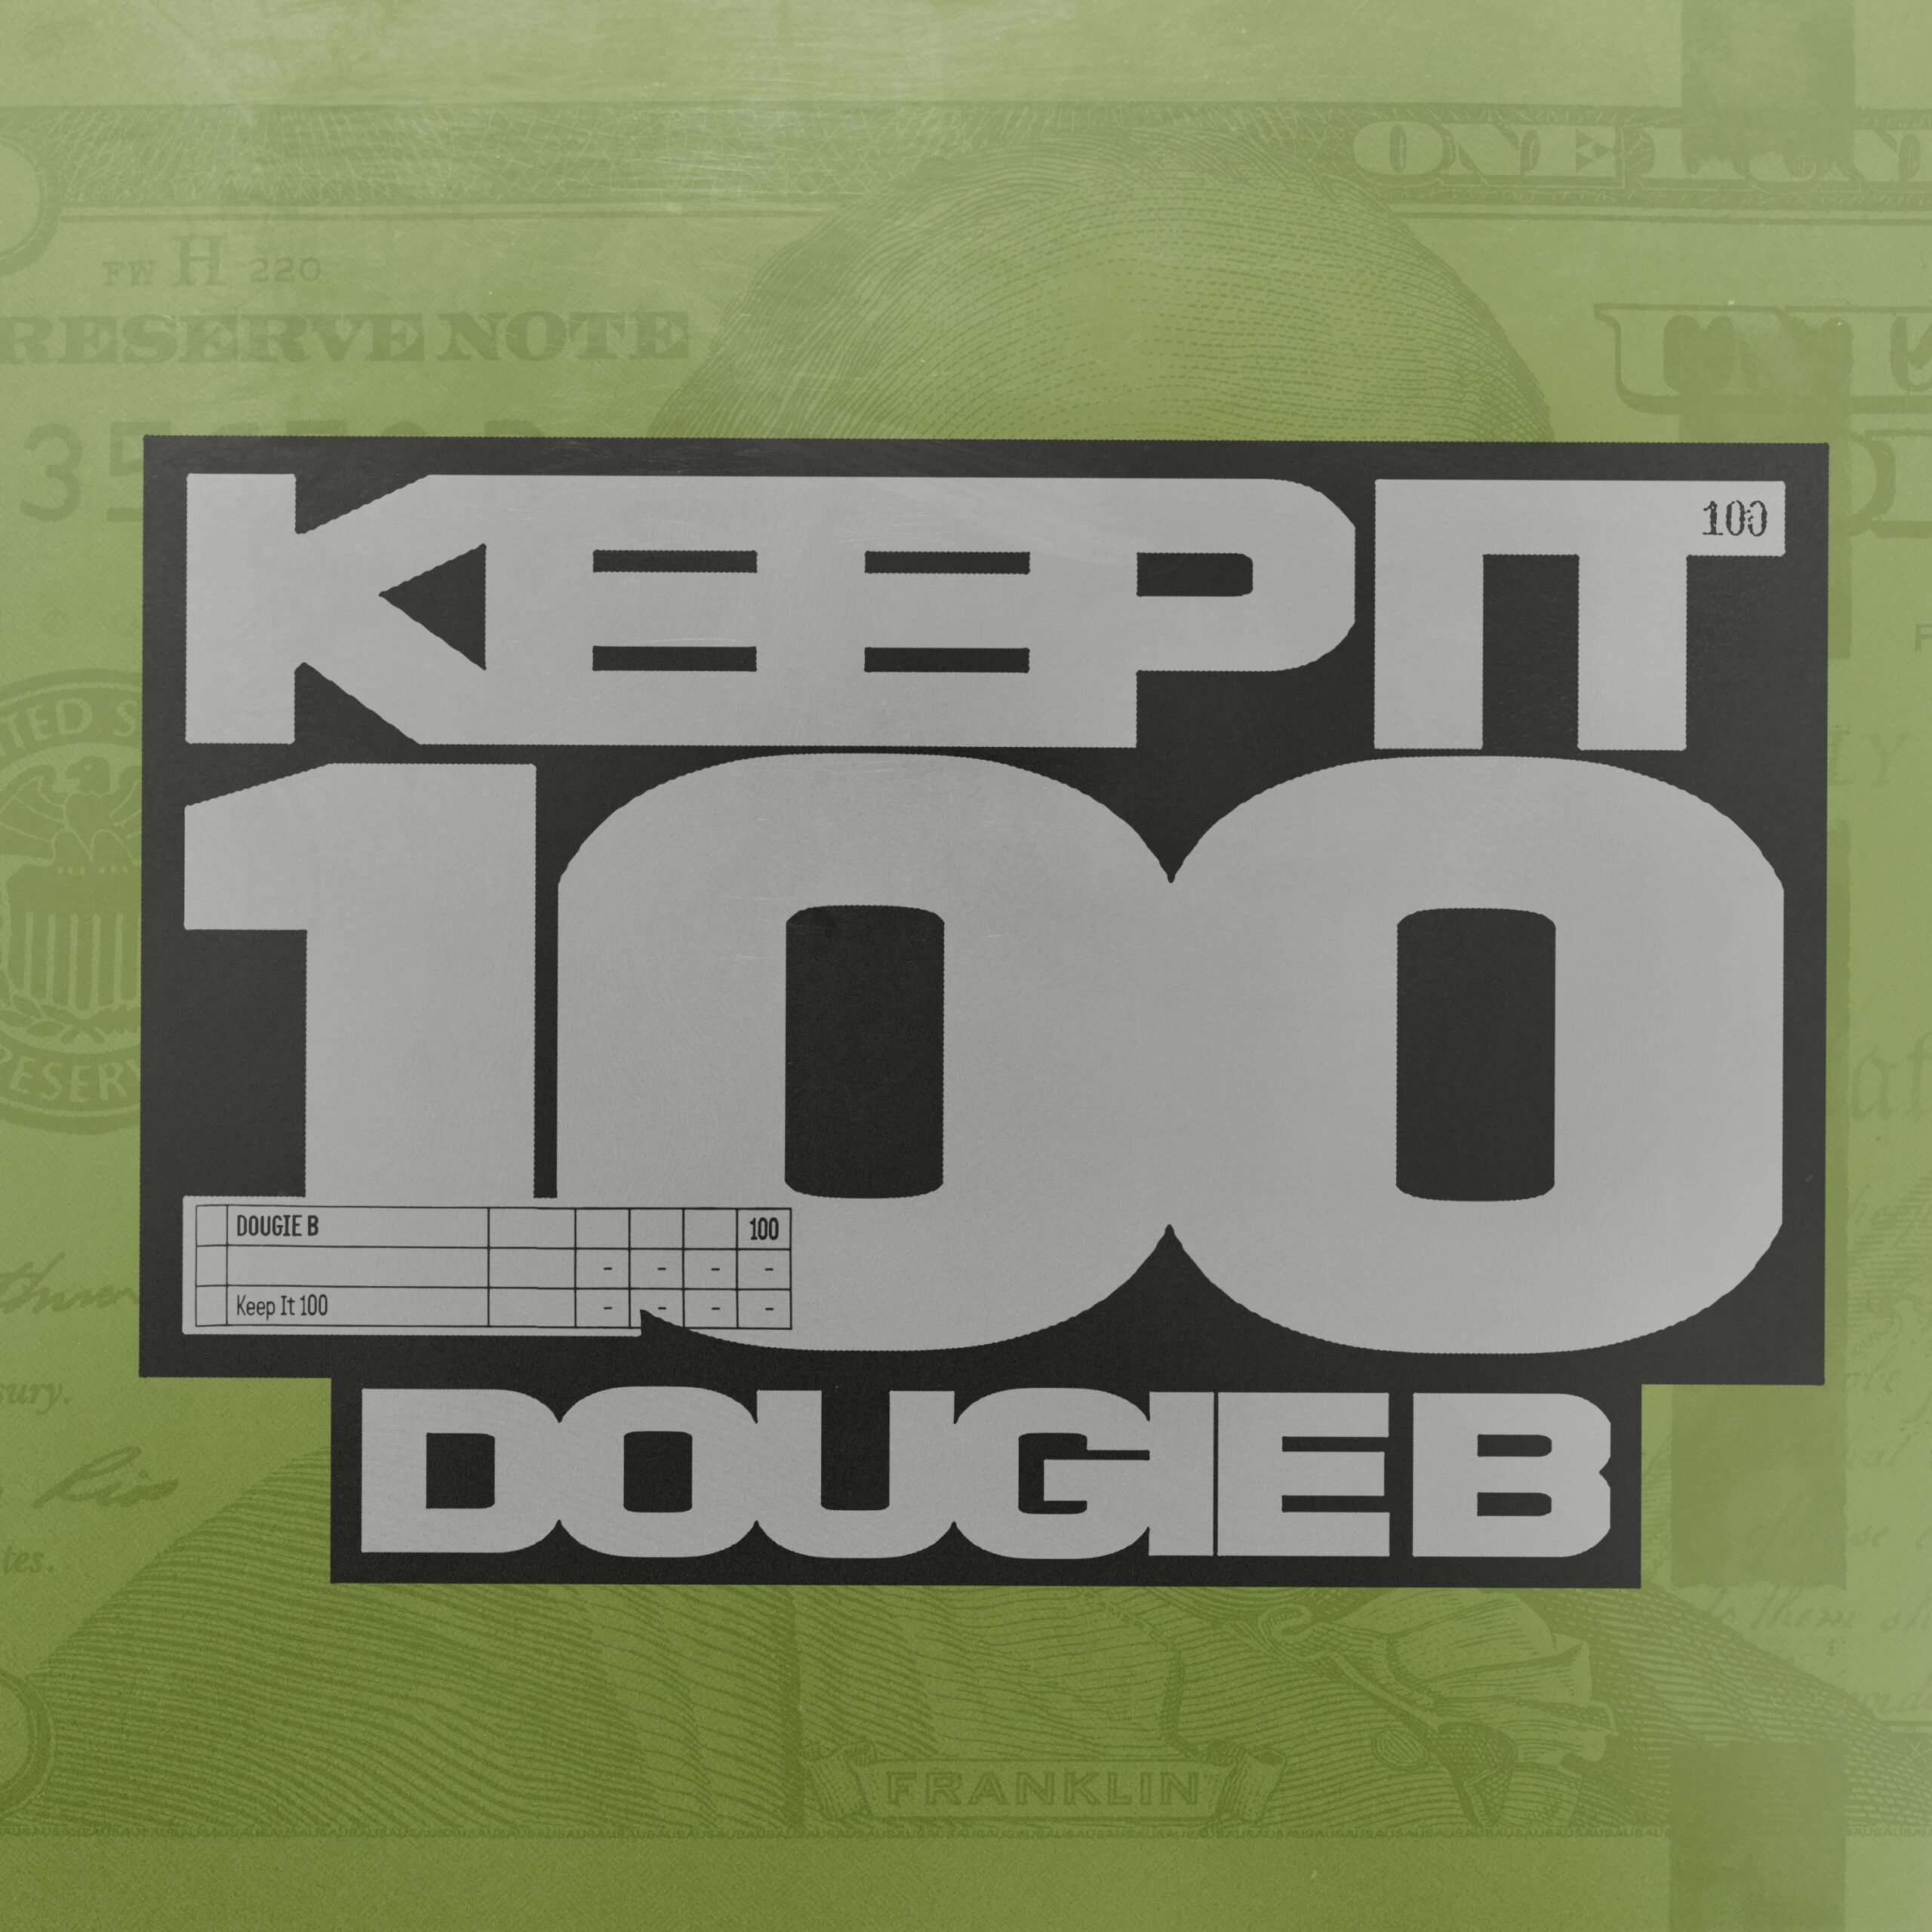 DOUGIE B - KEEP IT 100 via 360 MAGAZINE.